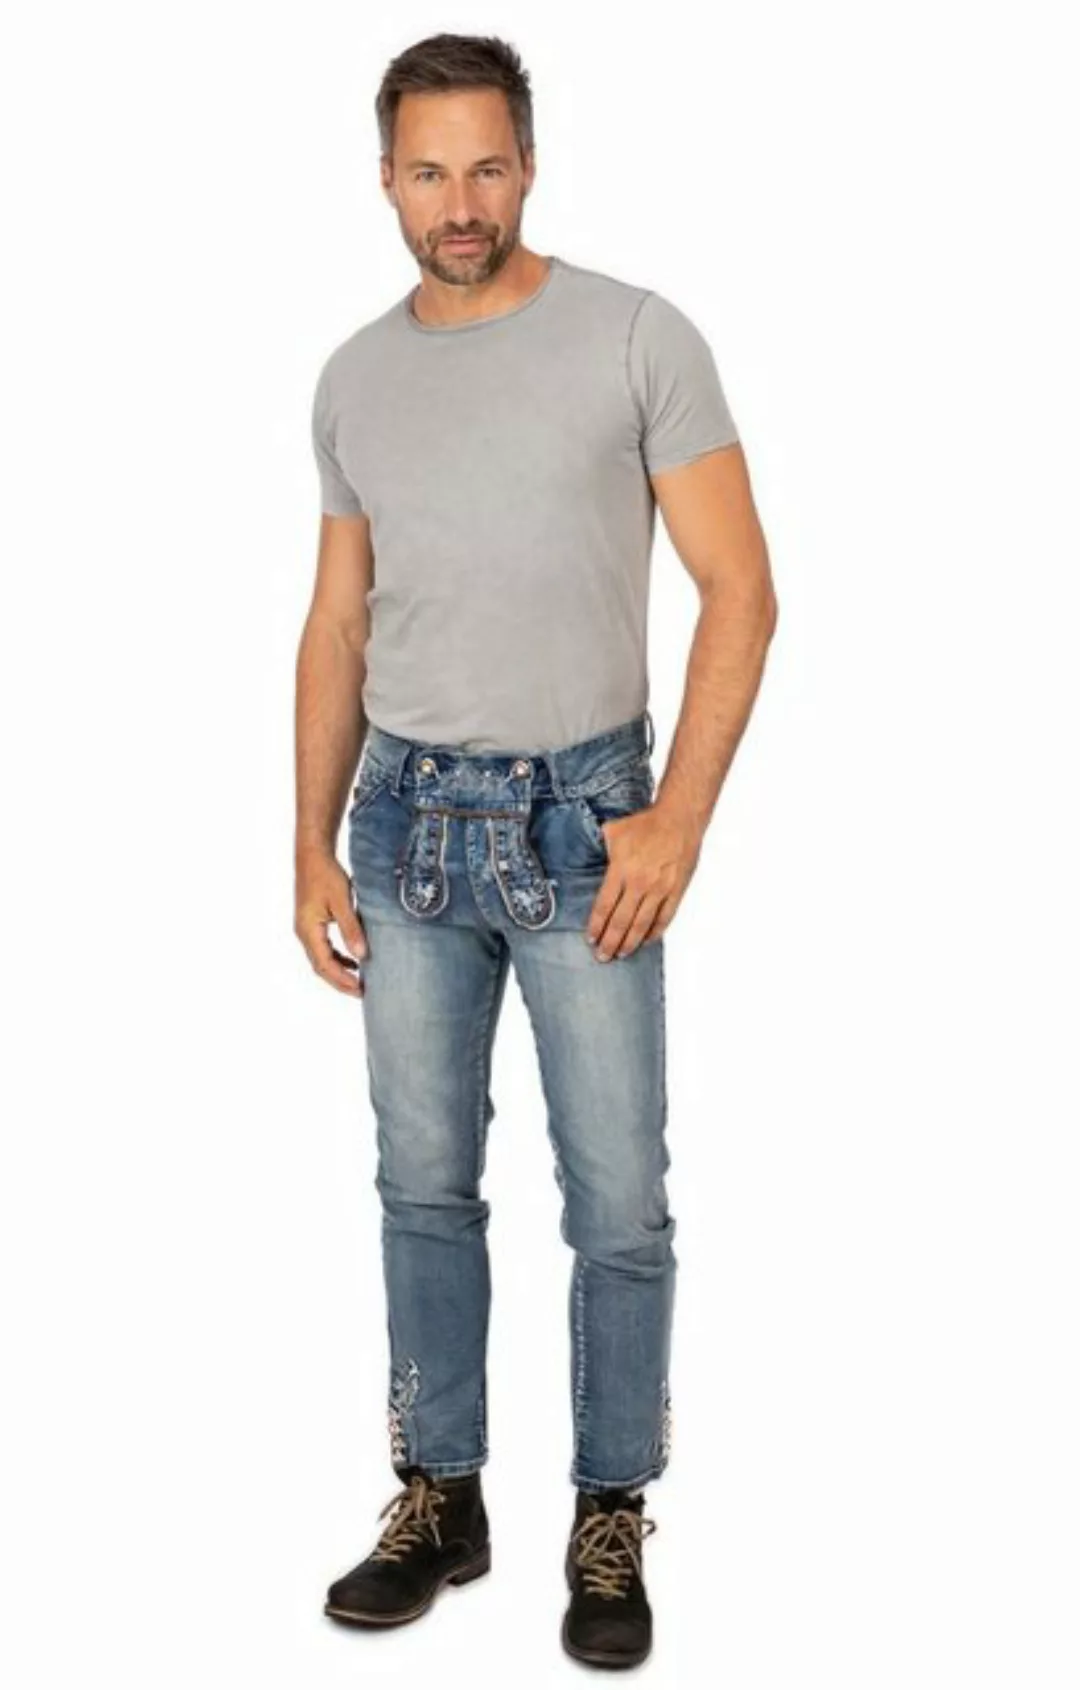 MarJo Trachtenhose Jeanshose lang GUSTL blau günstig online kaufen